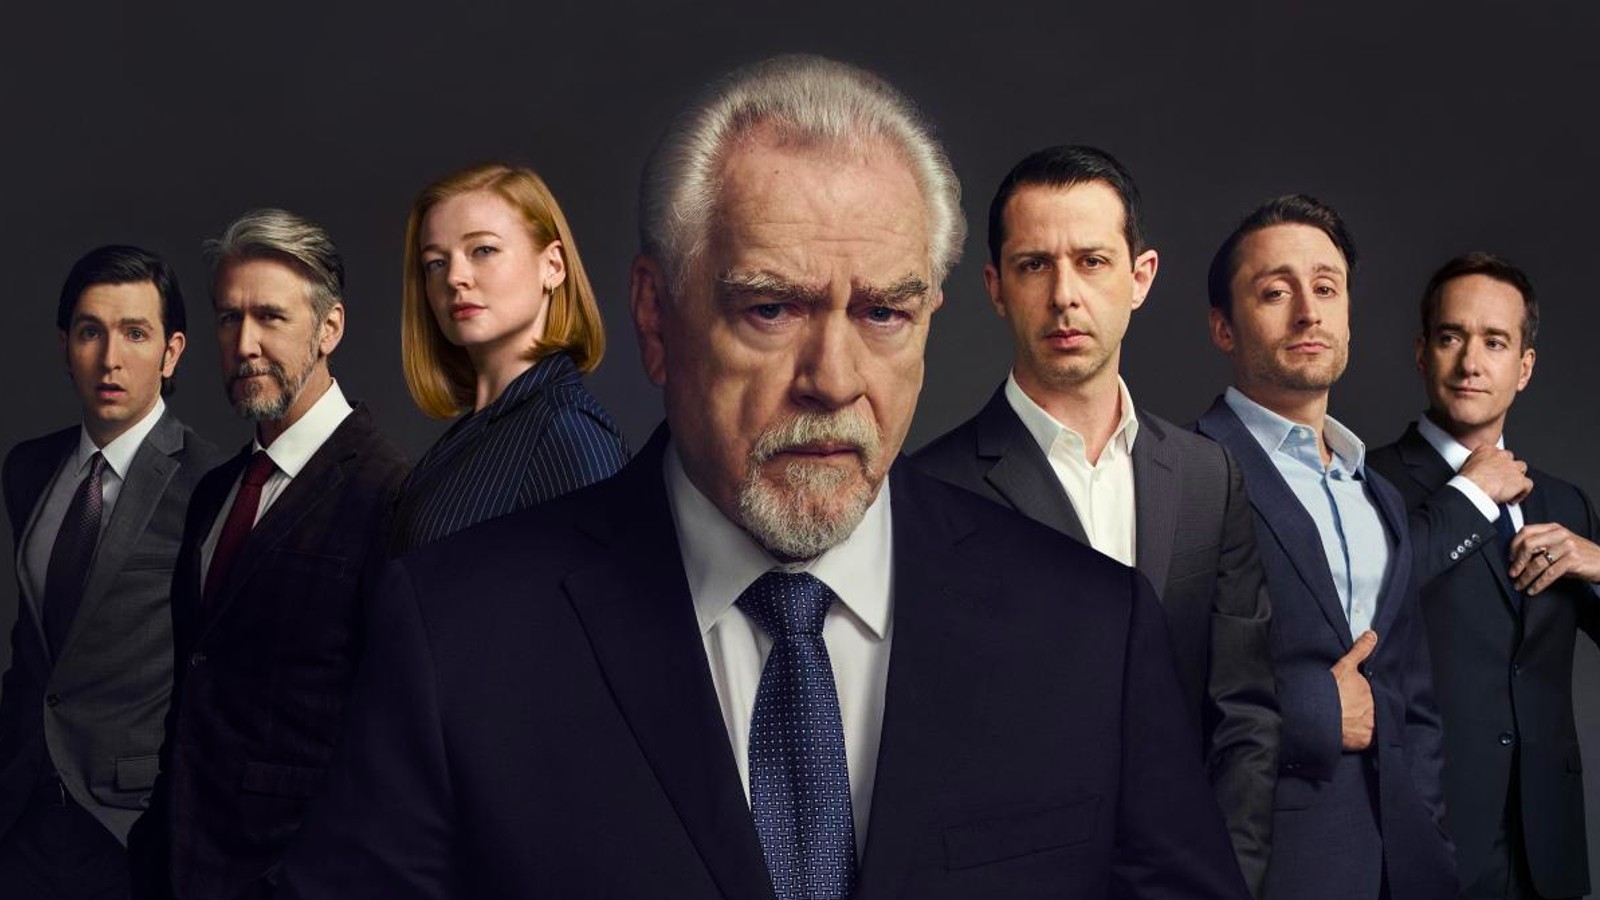 Wednesday cast: All actors & characters in the Netflix show - Dexerto